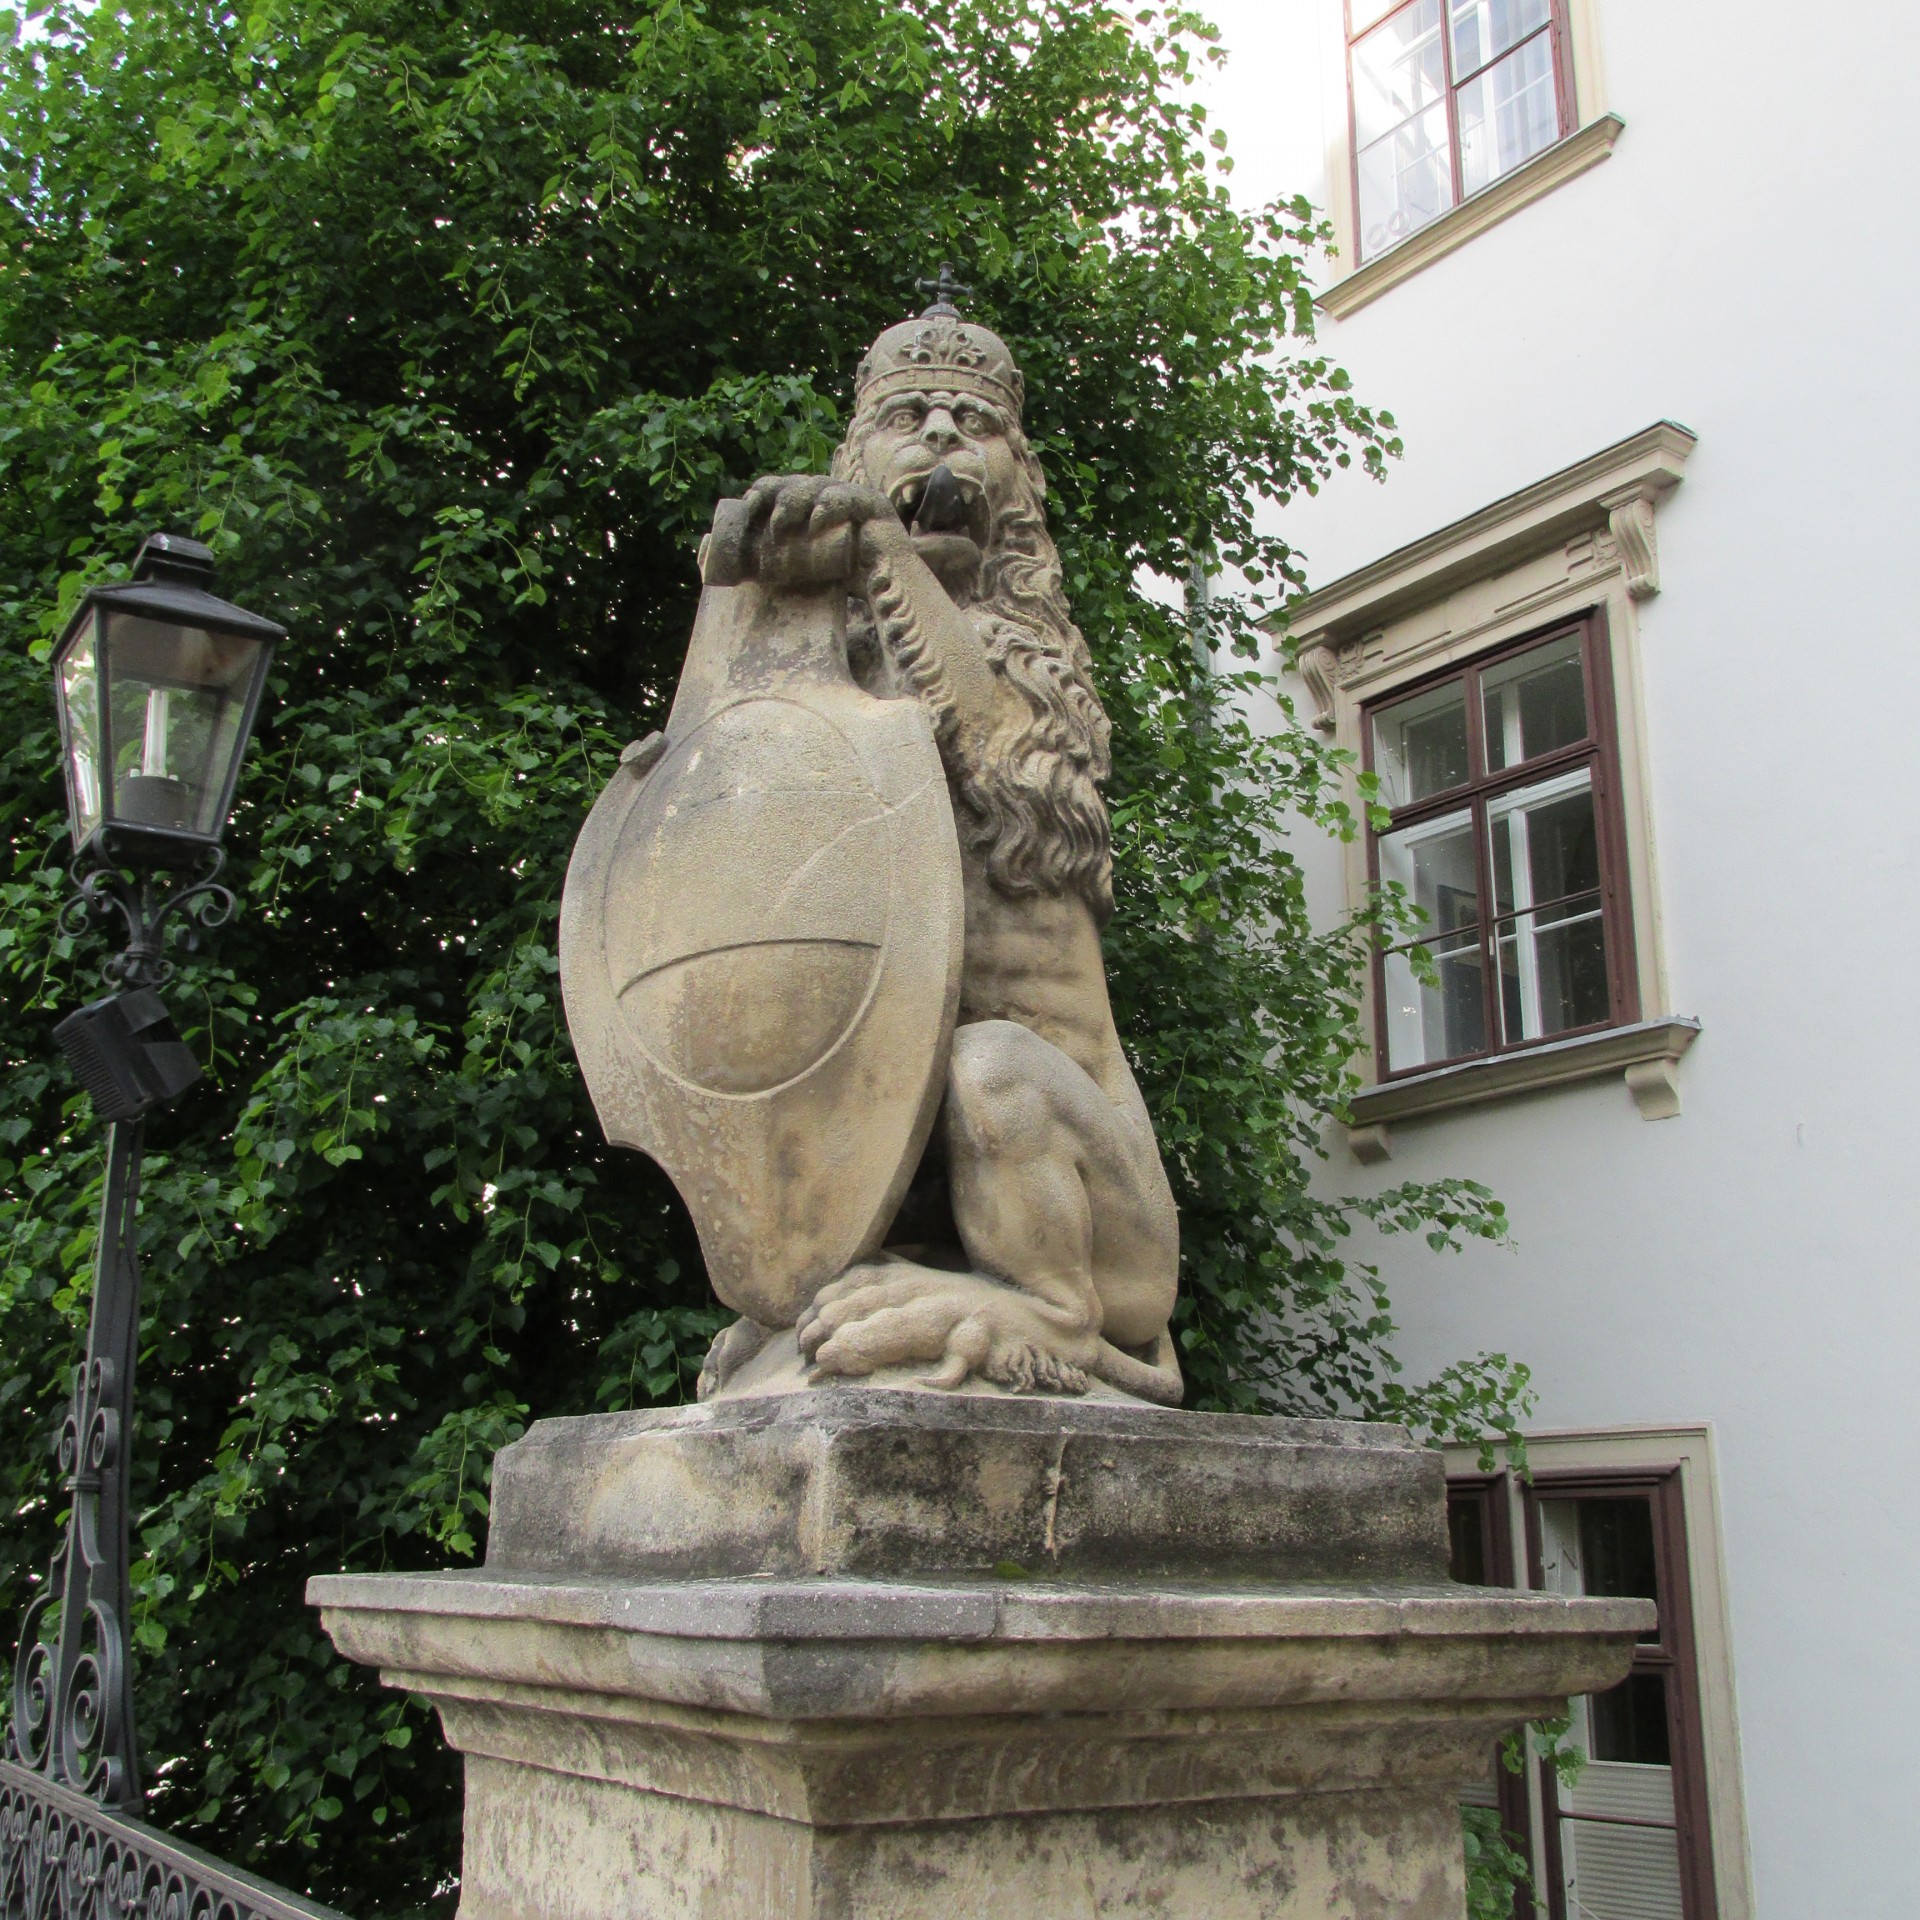 Statue Of A Lion